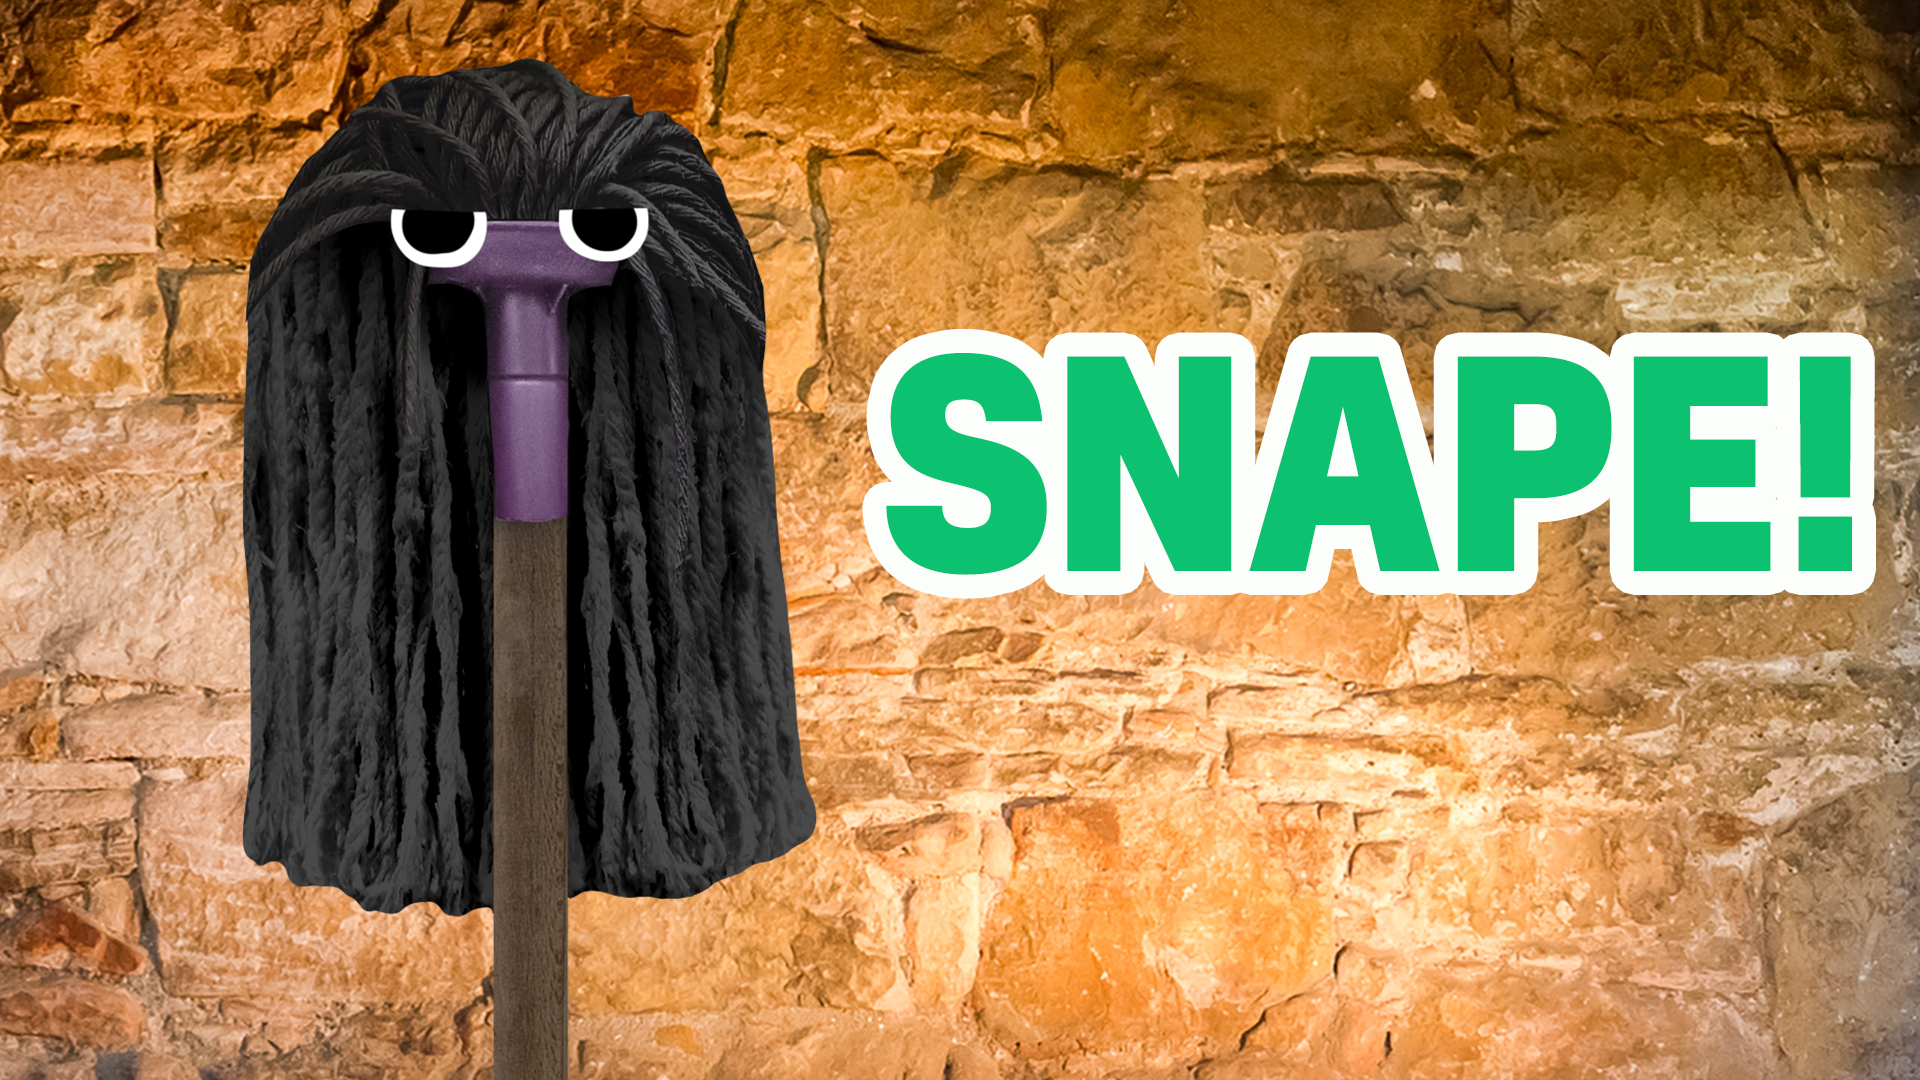 Snape result